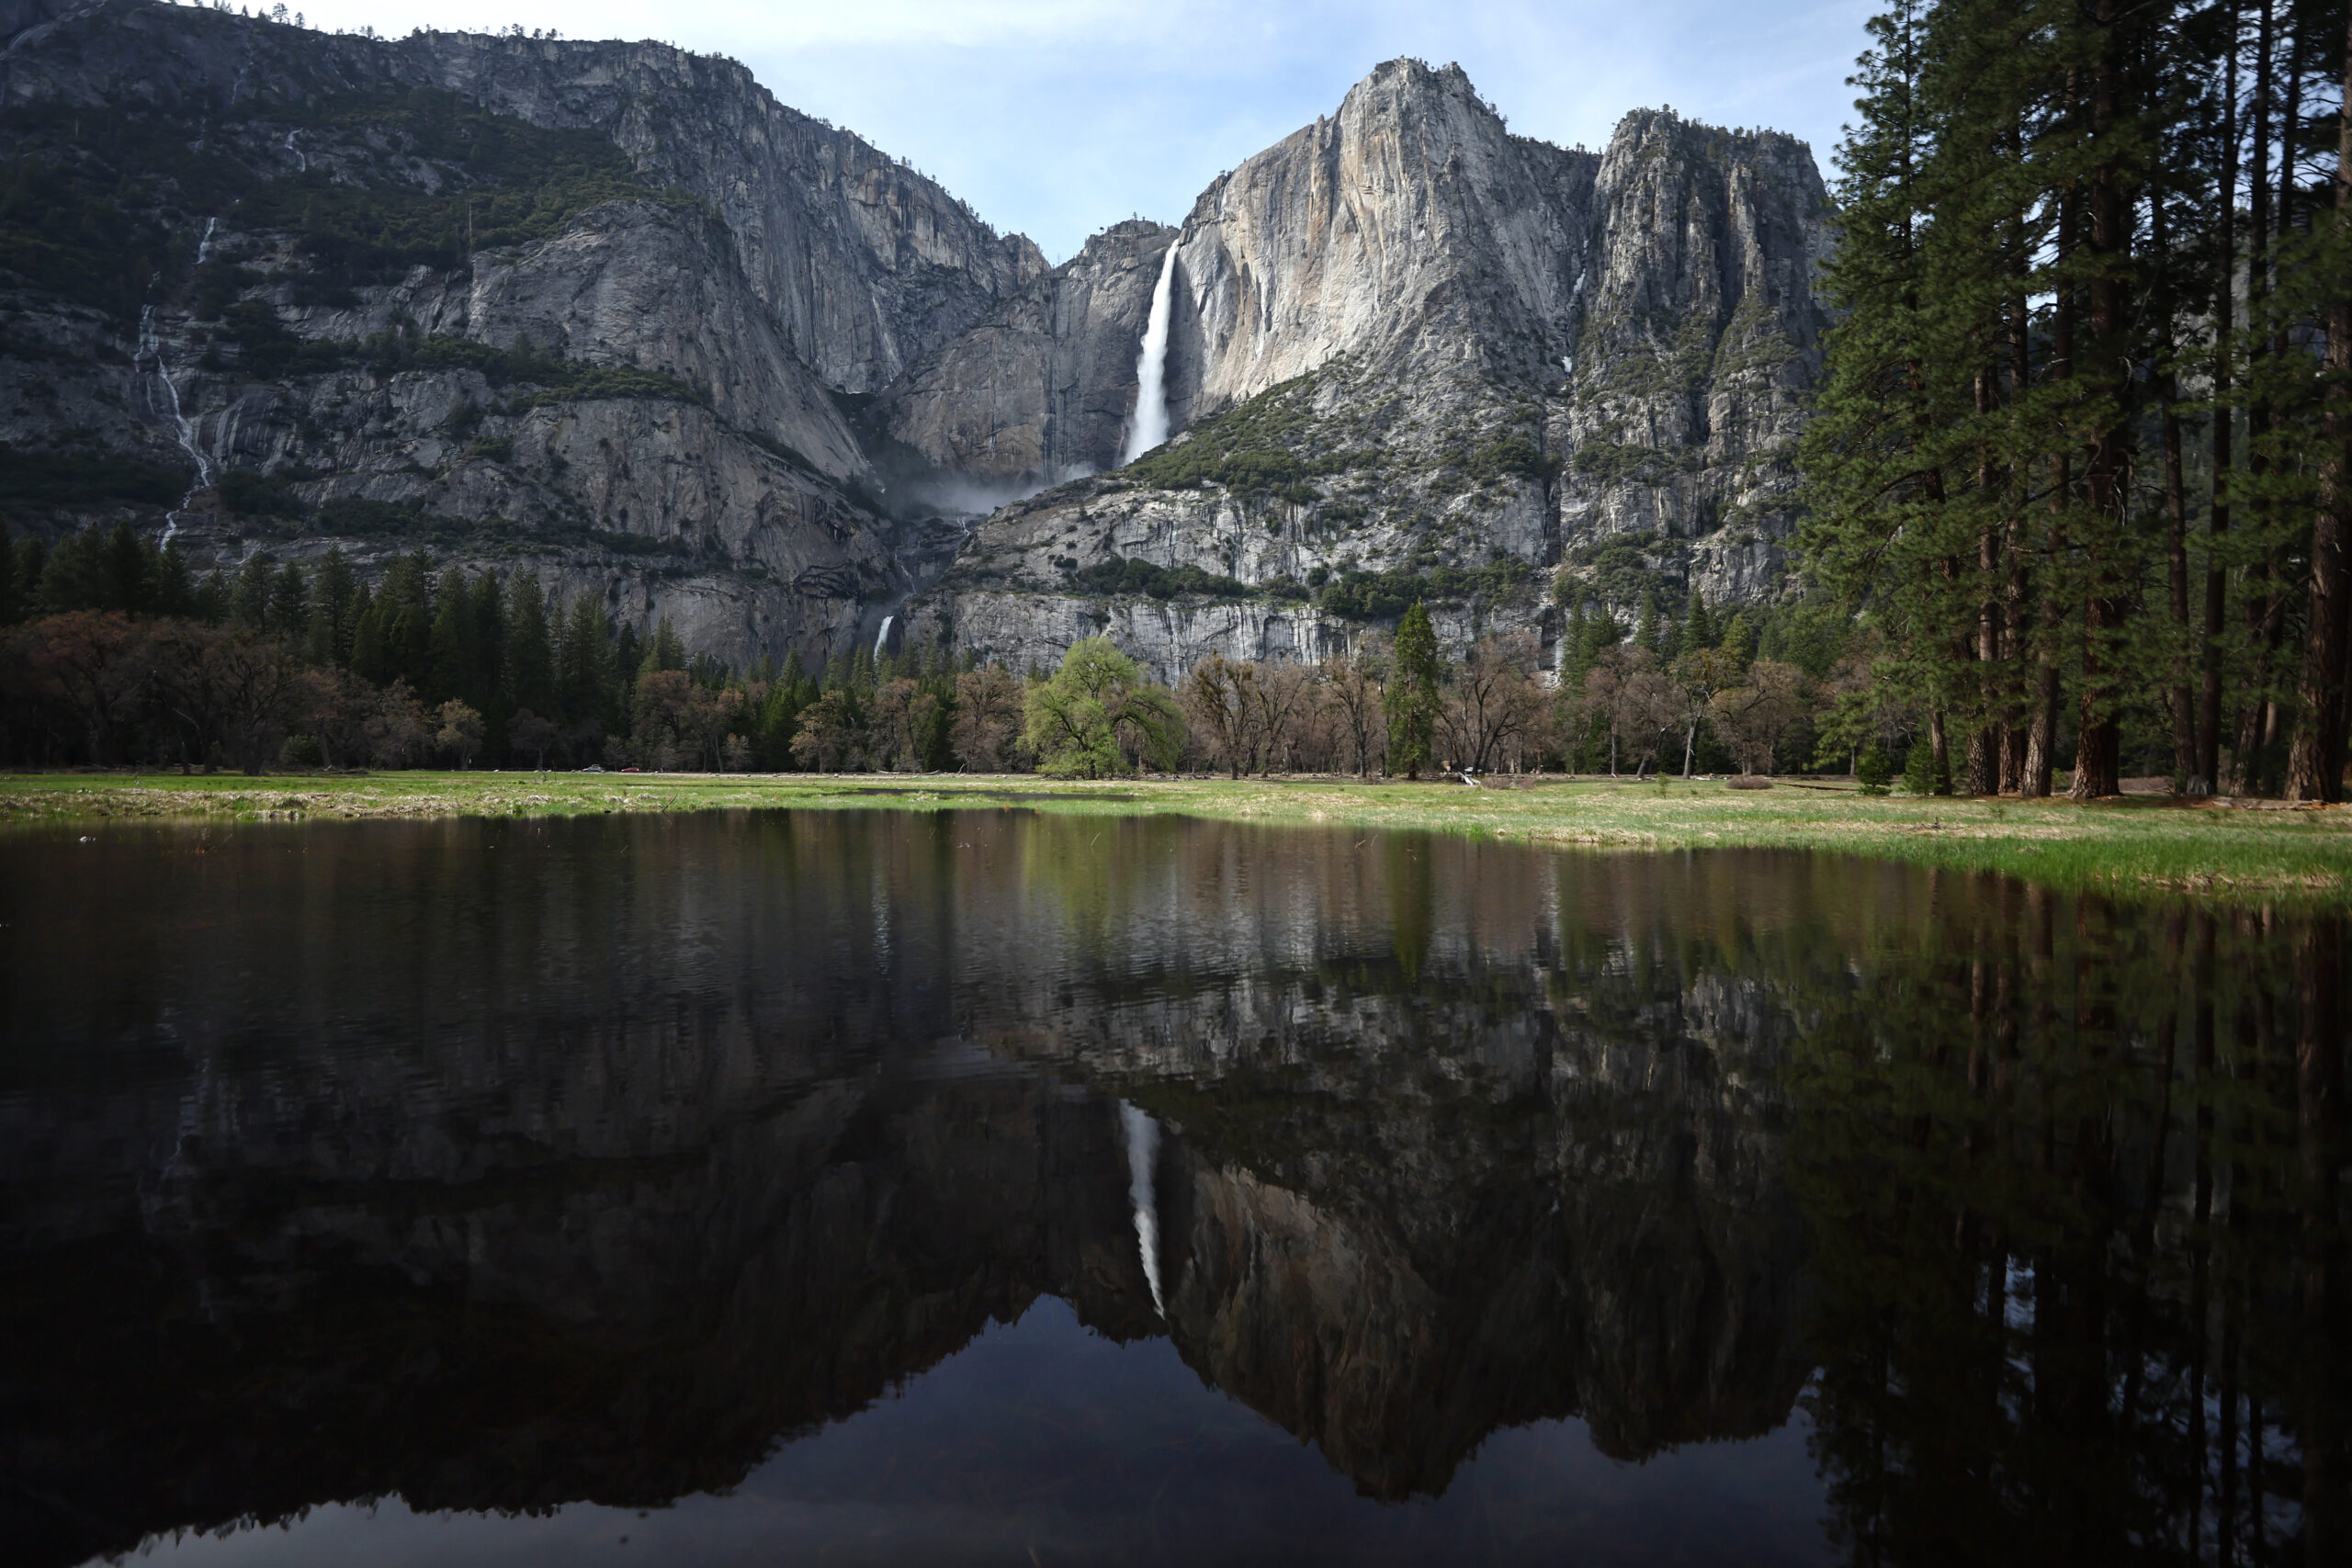 How To Score a Free, Last-Minute Campsite—Even in Yosemite